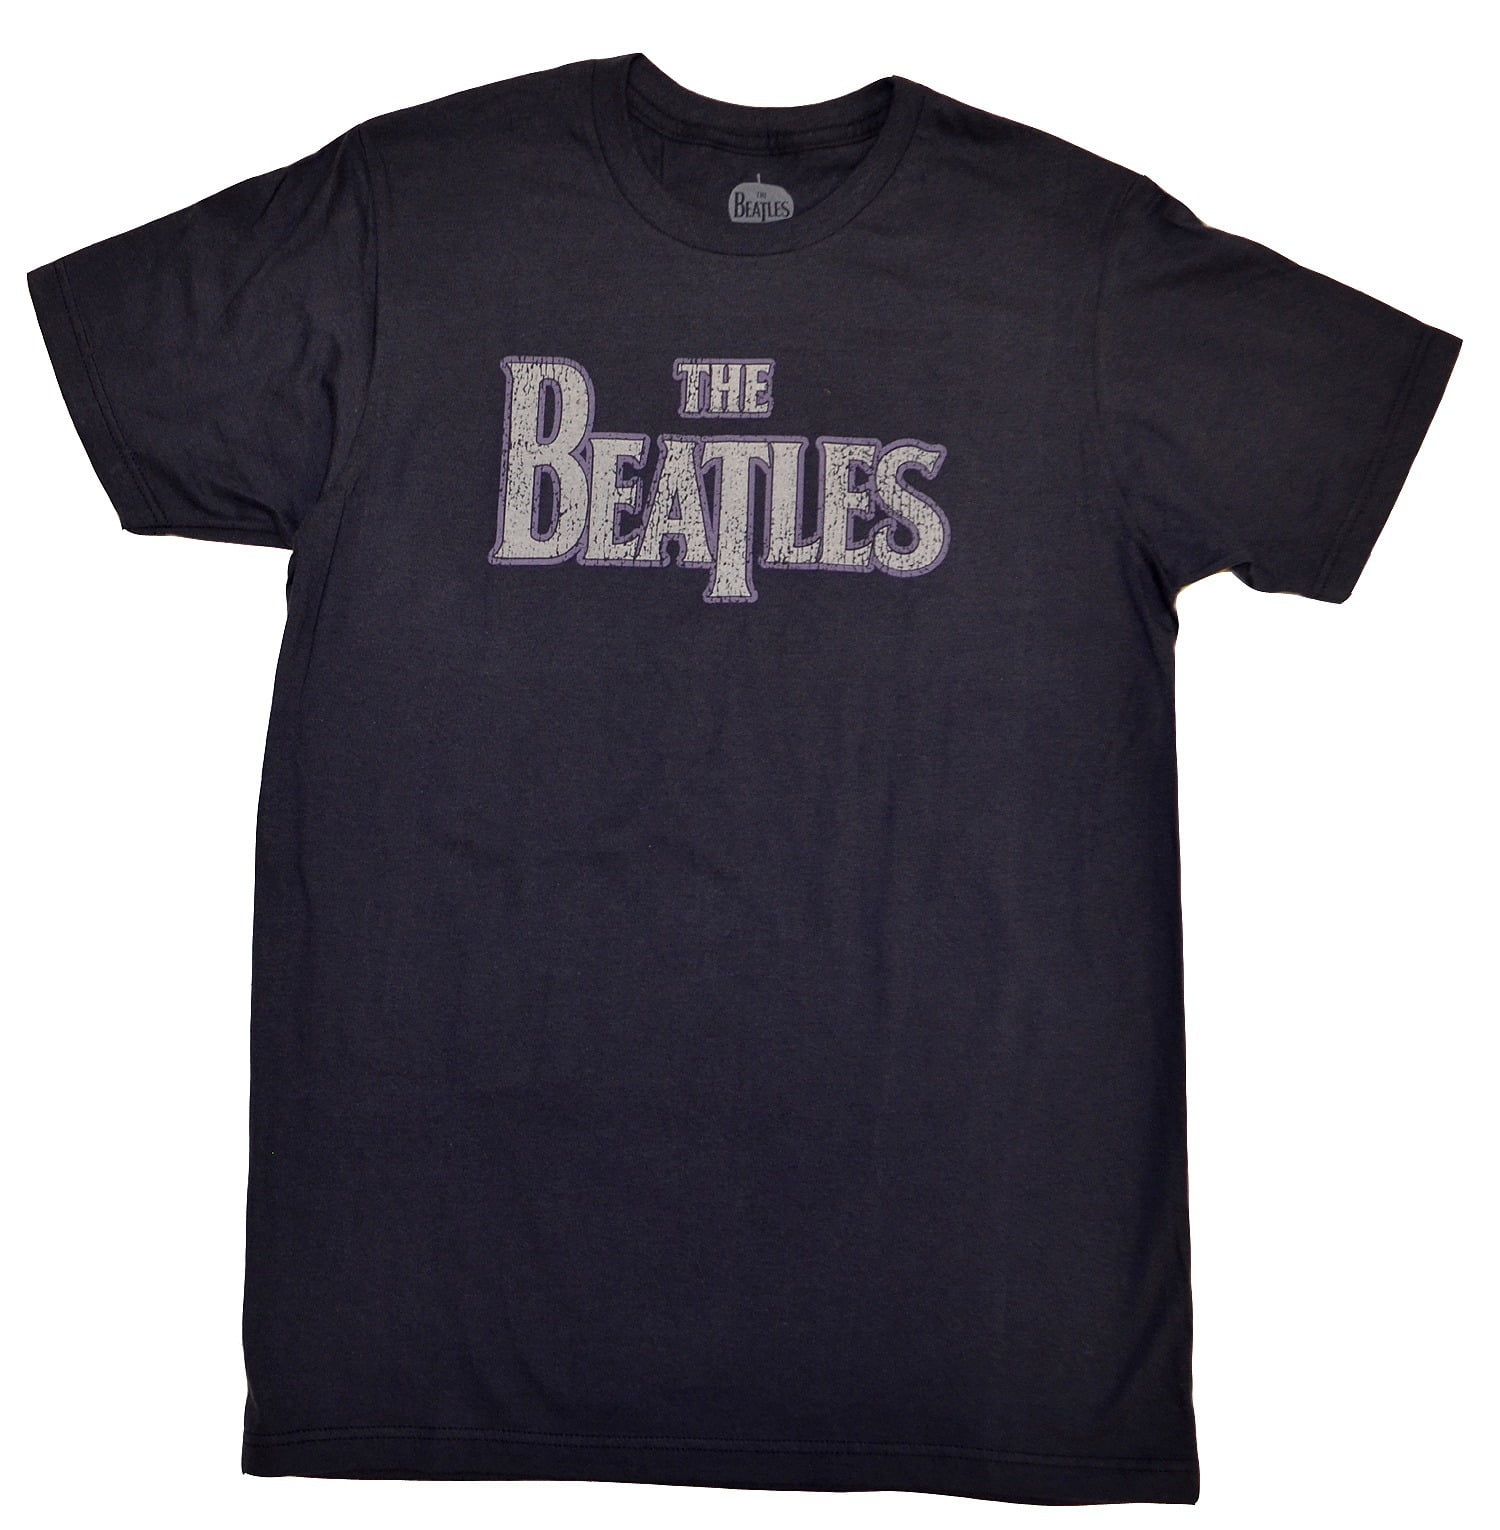 The Beatles - Beatles Vintage Logo T-Shirt - Walmart.com - Walmart.com